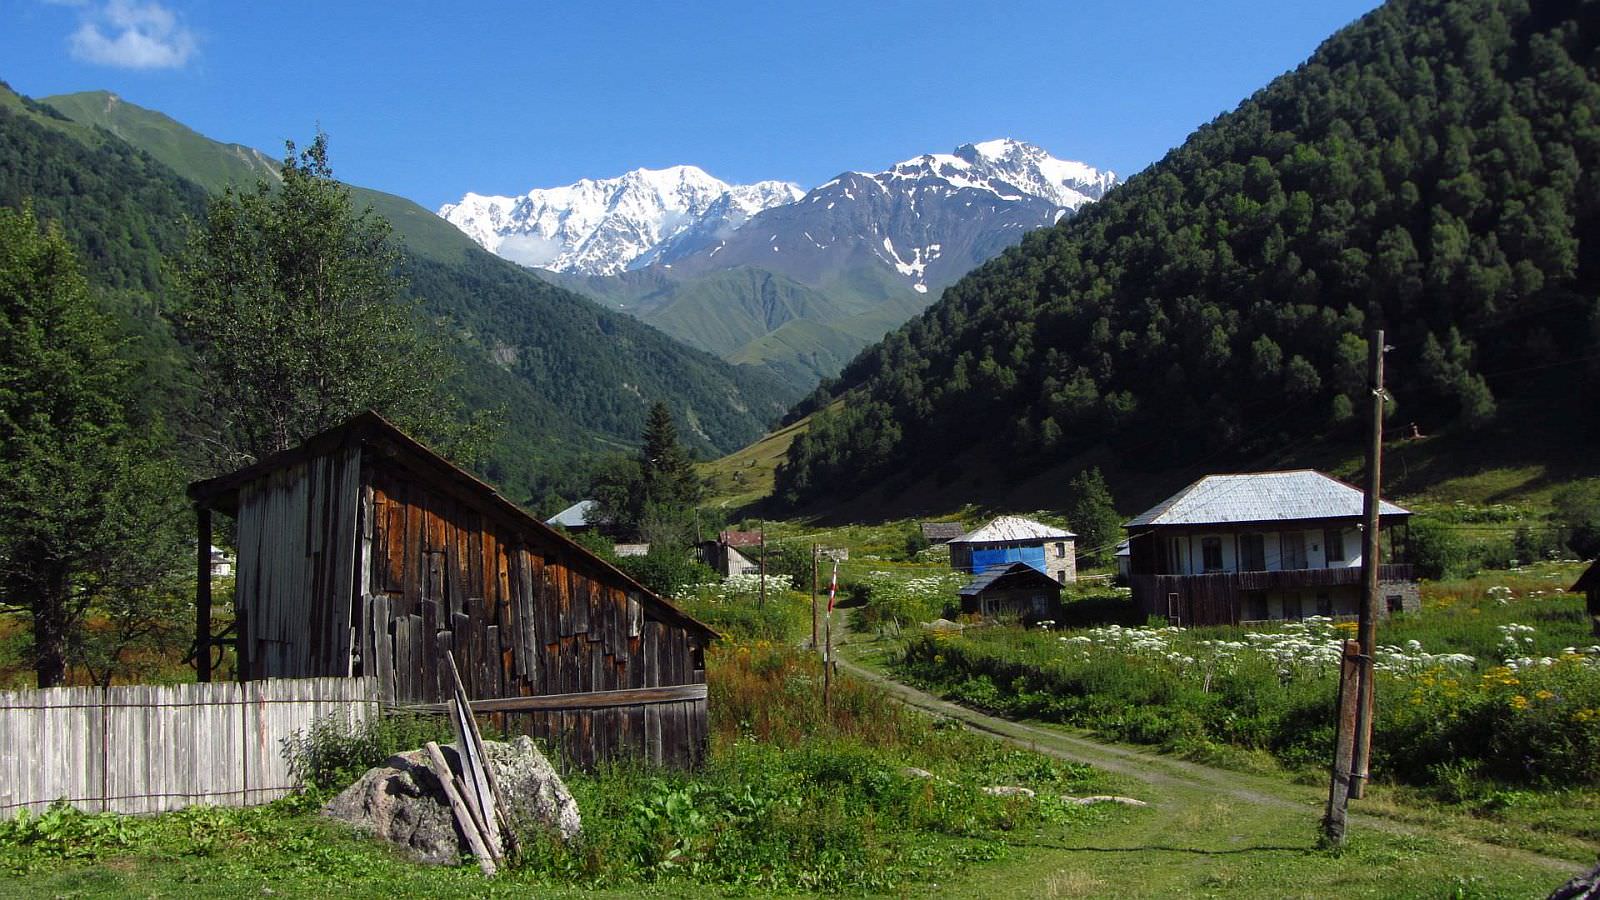 Tsana village in the Lower Svaneti